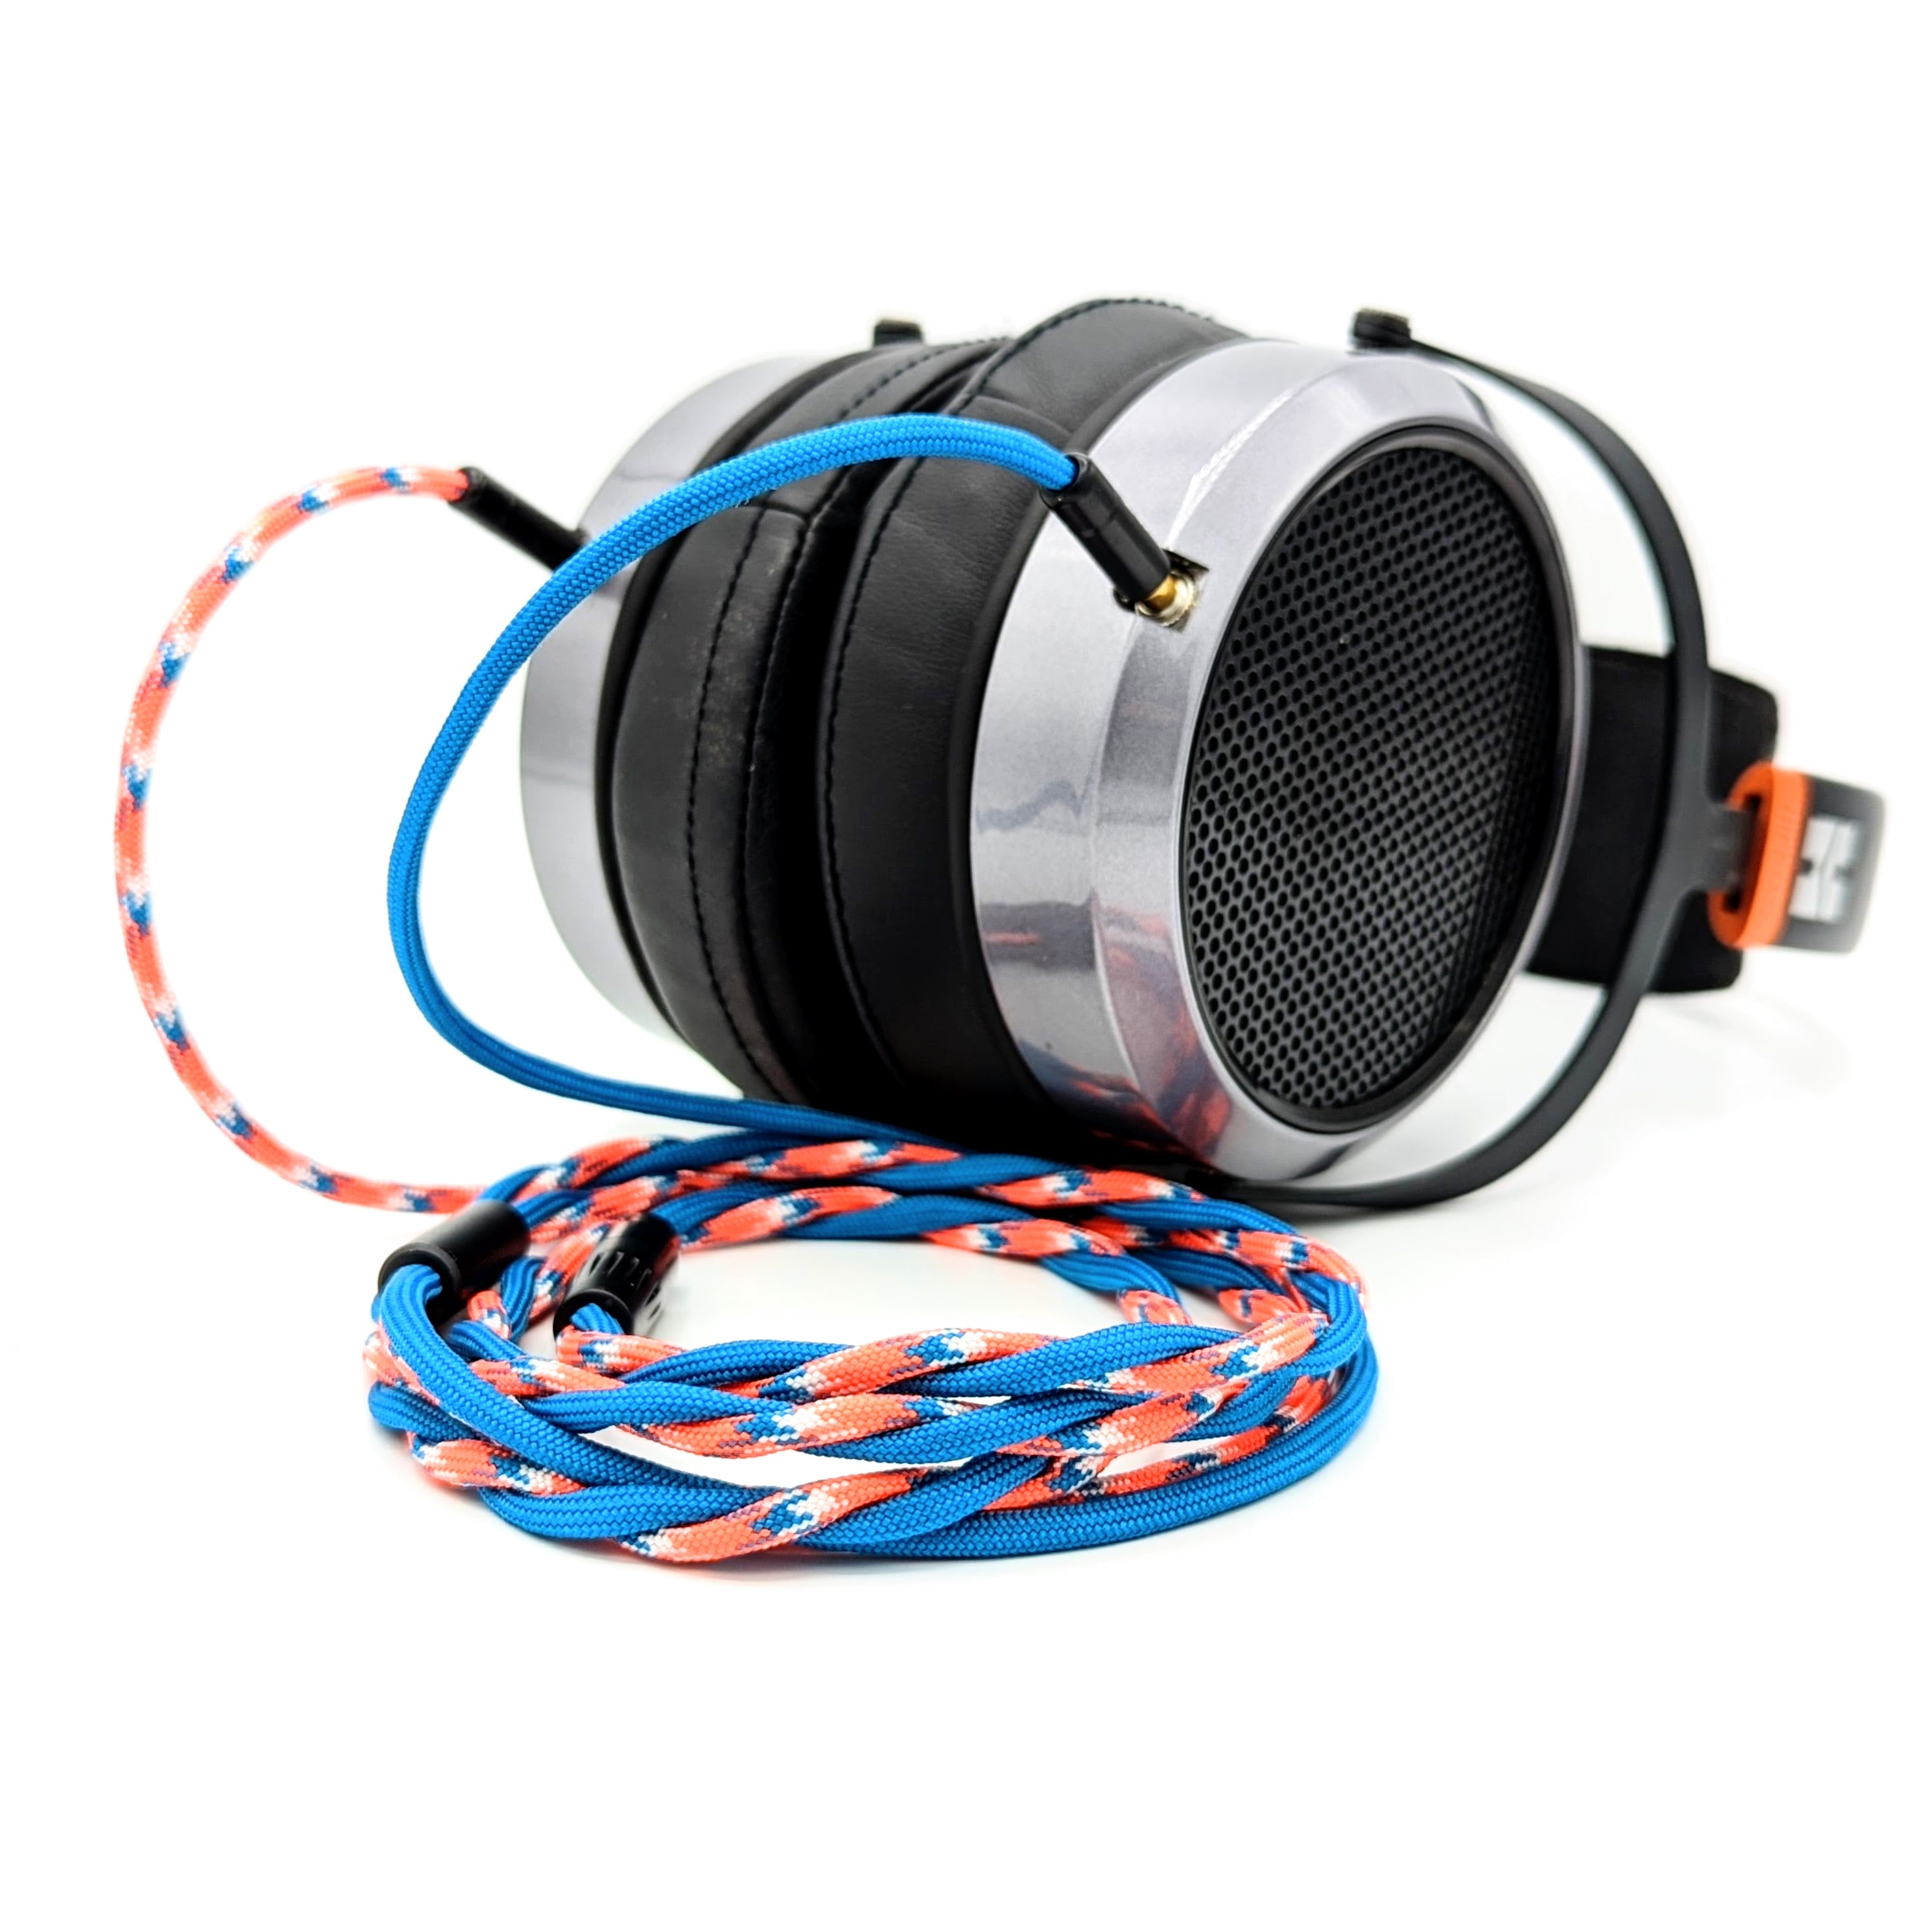 TWBRA-HC-9: Custom Twisted Braid Dual 3.5mm TRS Balanced Headphone Cable for Hifiman / Focal + more